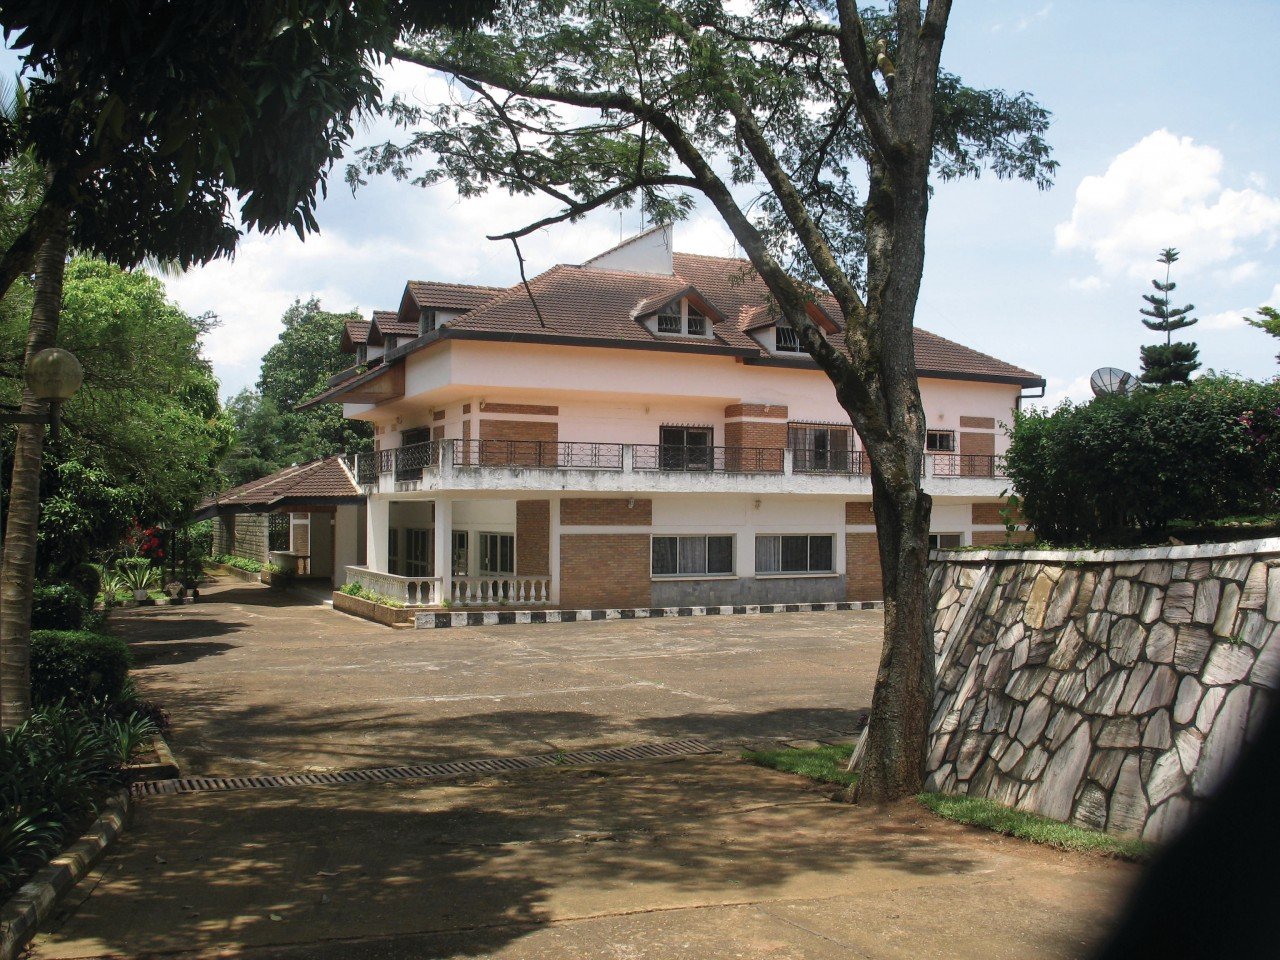 Dia3 : Visita ao Kigali Memorial